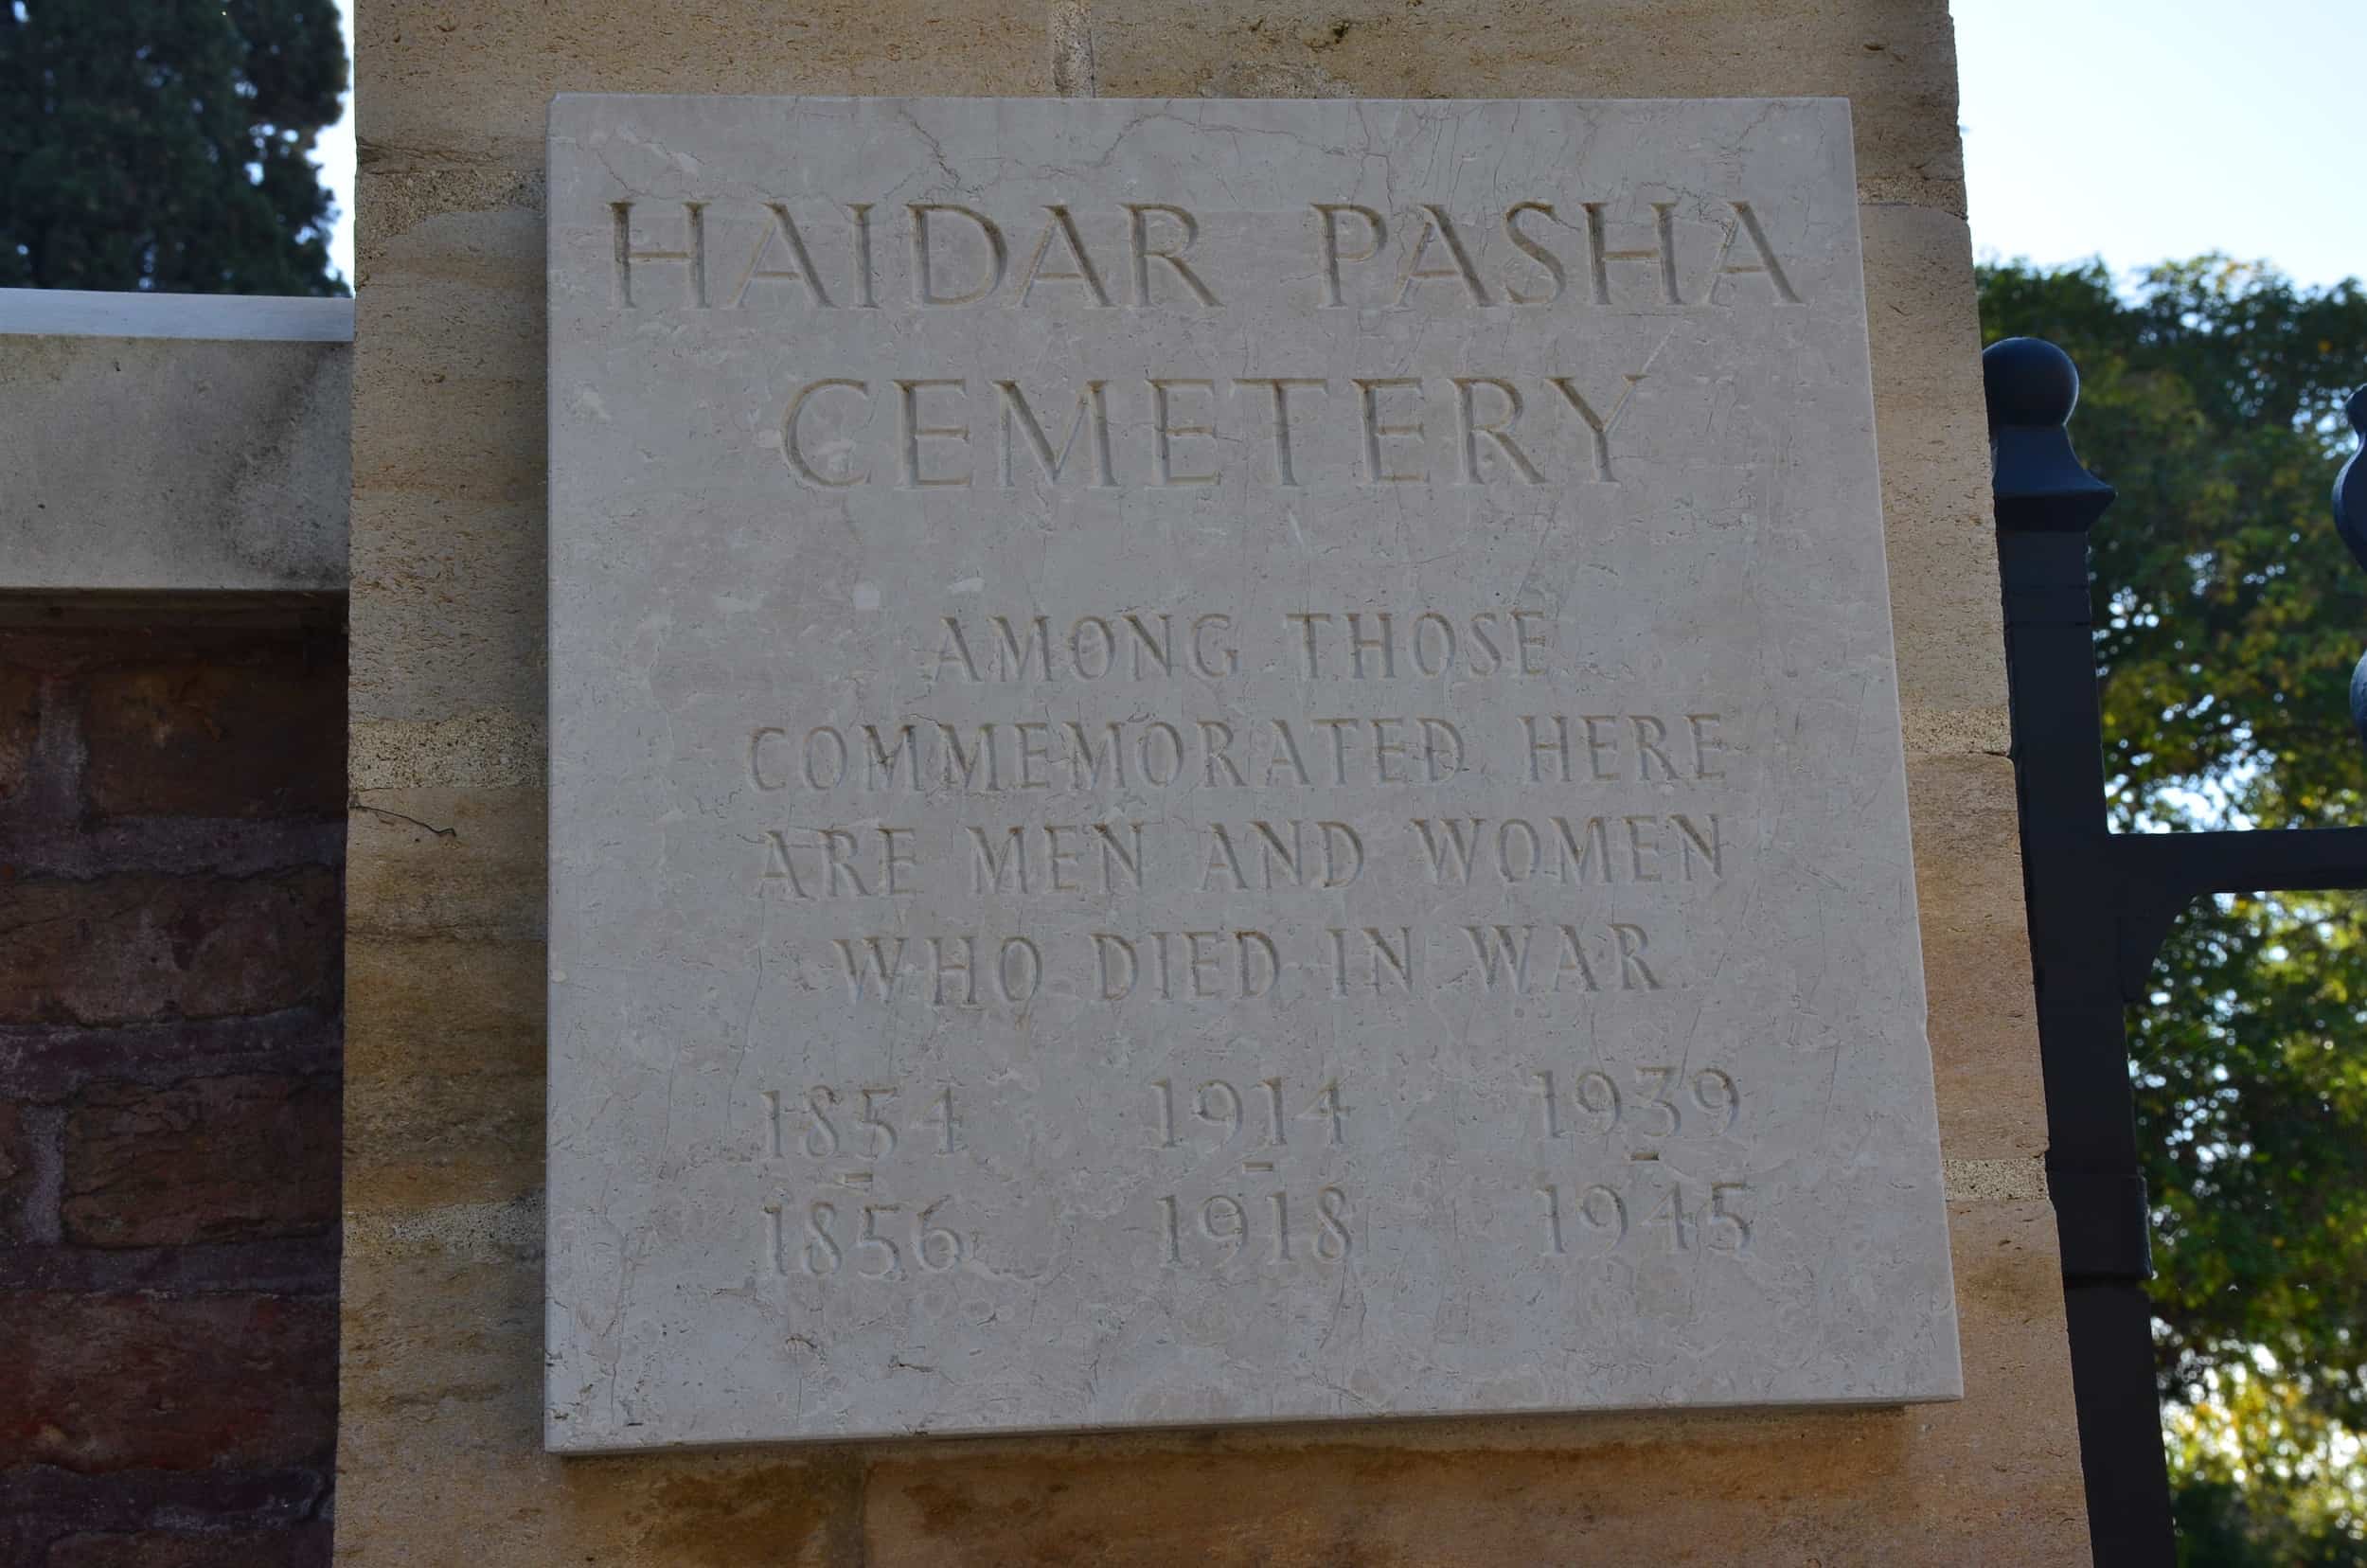 Haidar Pasha Cemetery